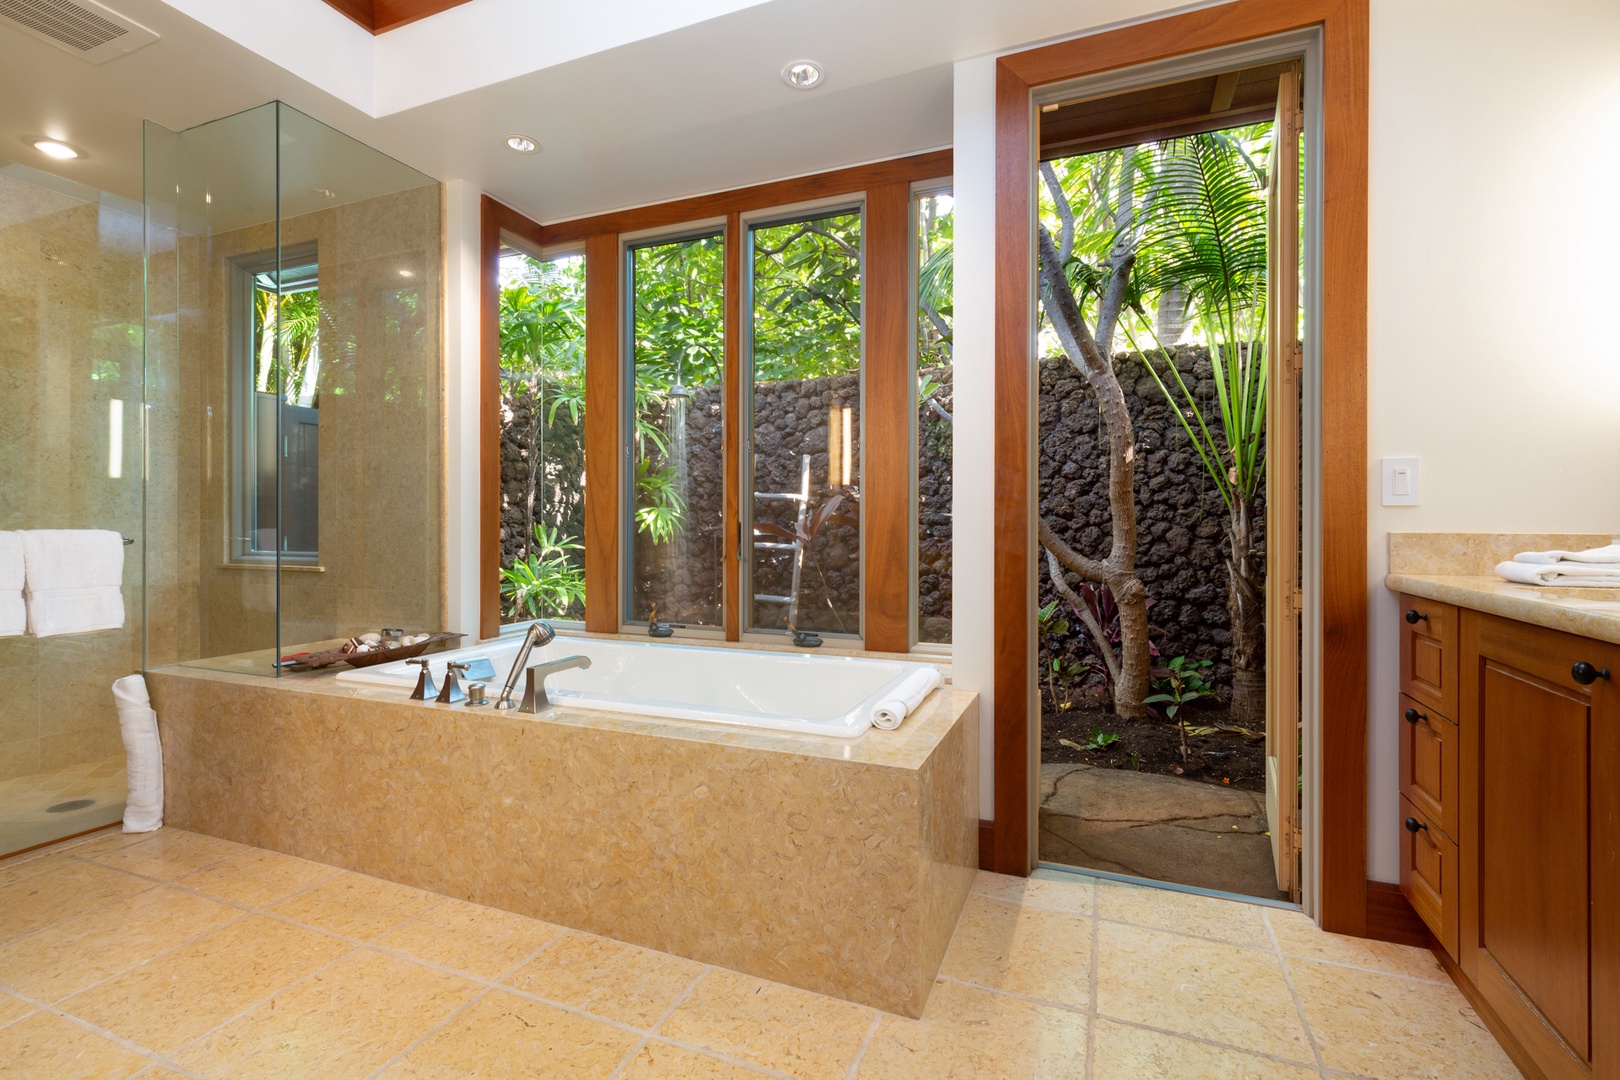 Kailua Kona Vacation Rentals, 4BD Hainoa Estate (102) at Four Seasons Resort at Hualalai - Alternate view towards the oversized soaking tub, walk-in shower & tropical atrium